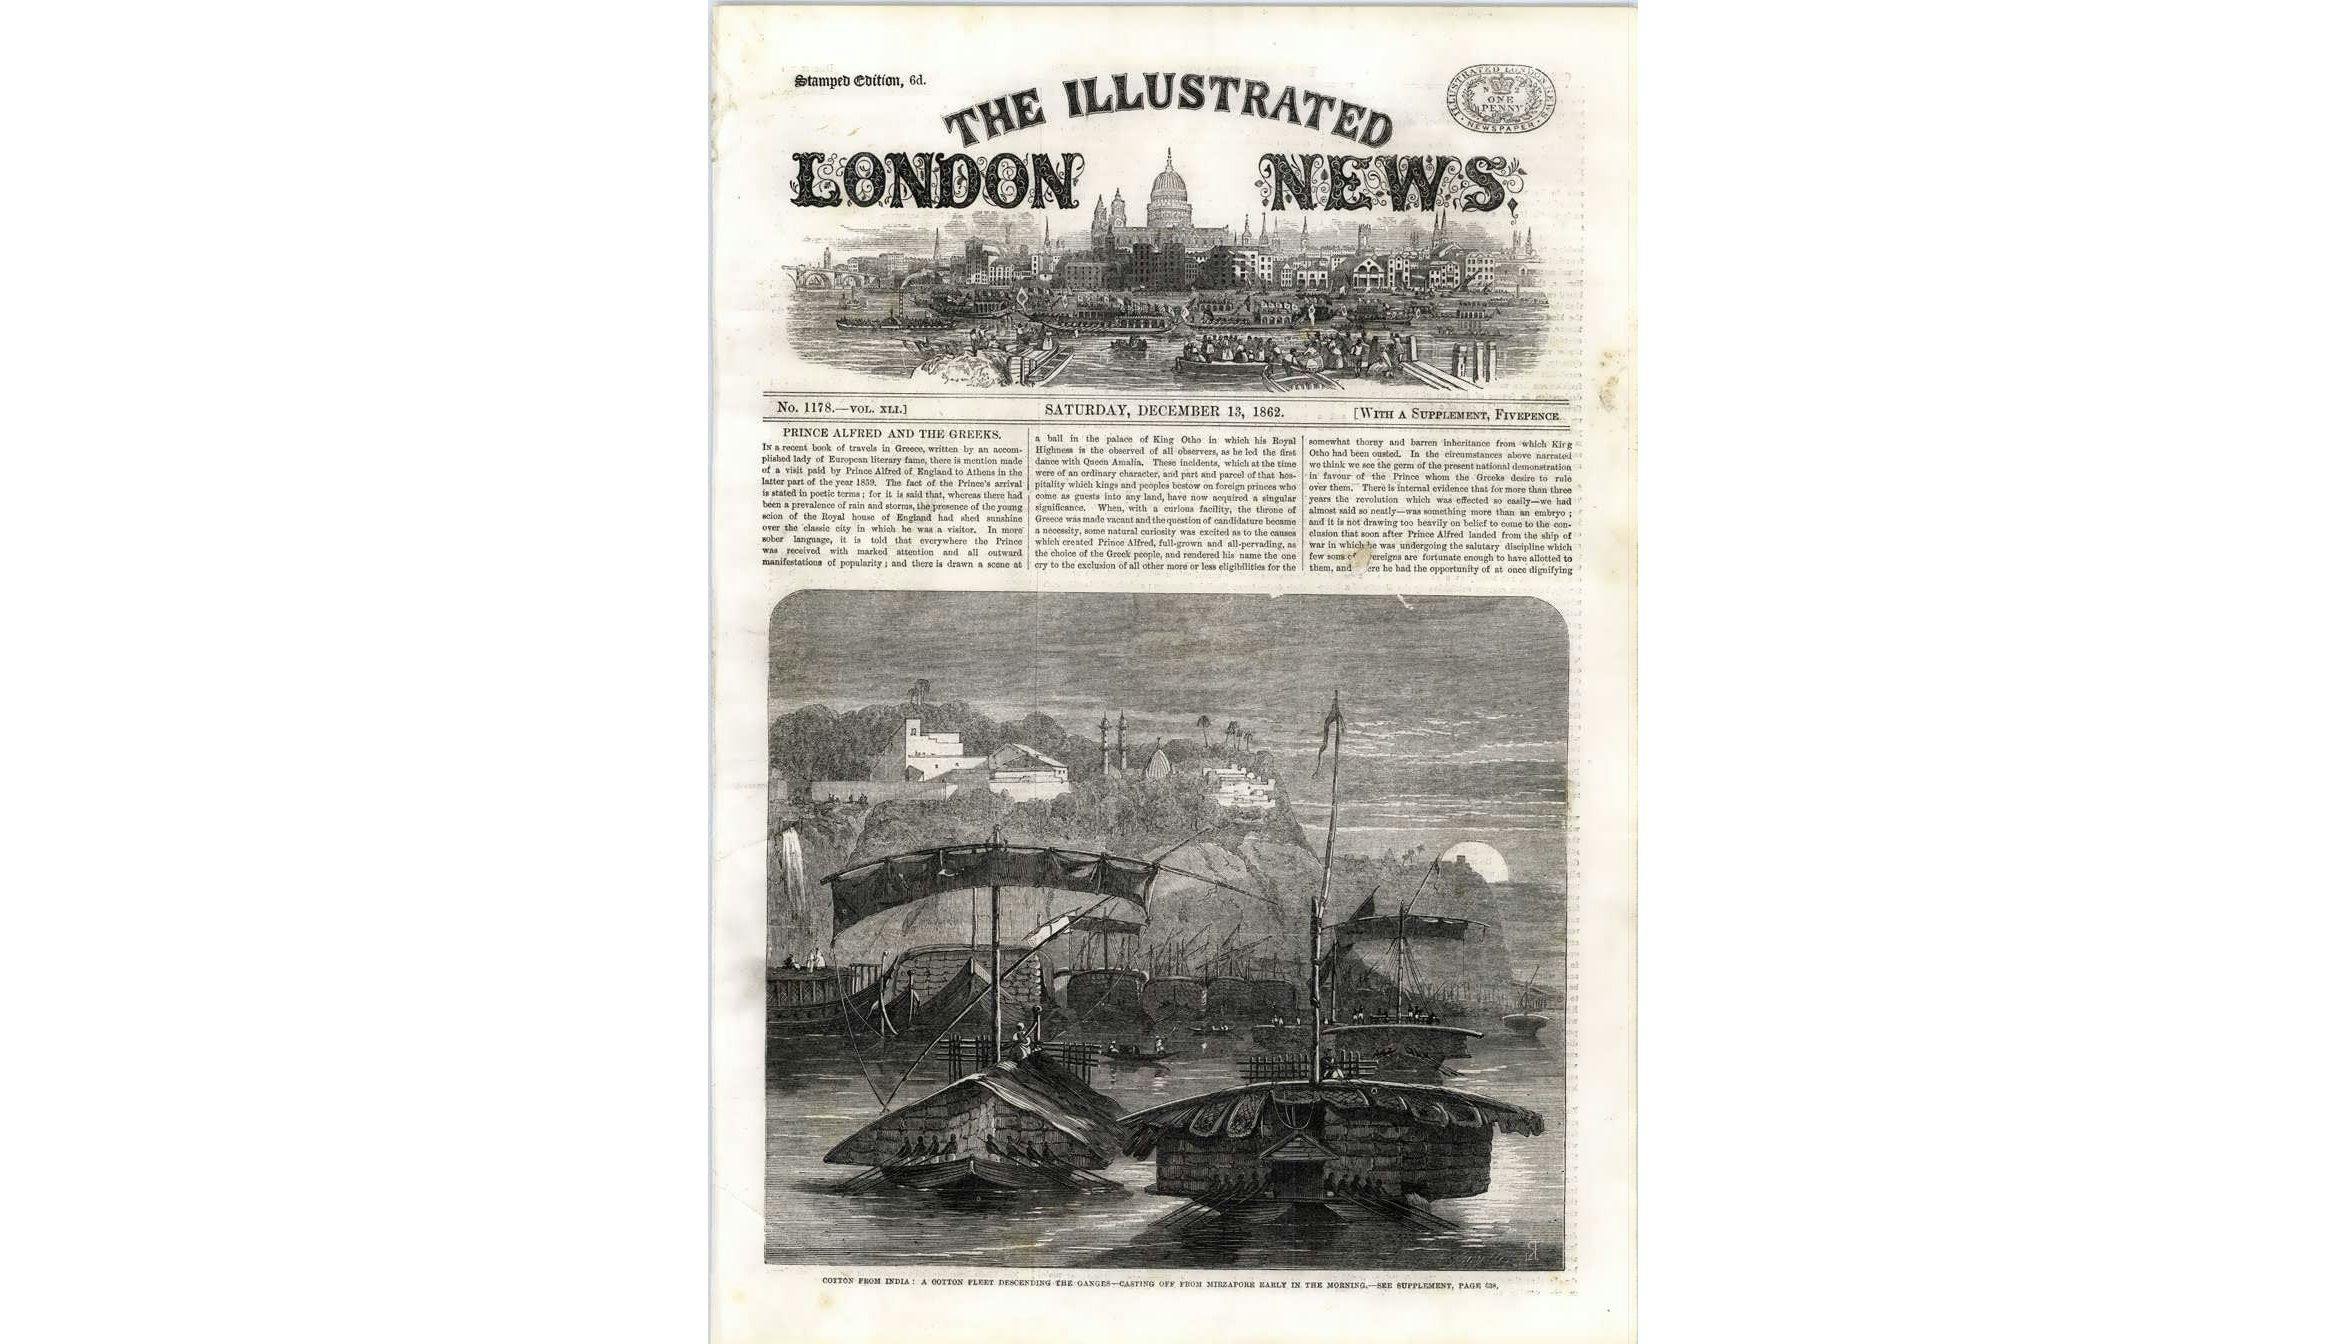 Fleets proceeding from Mirzapur, London News, 1862